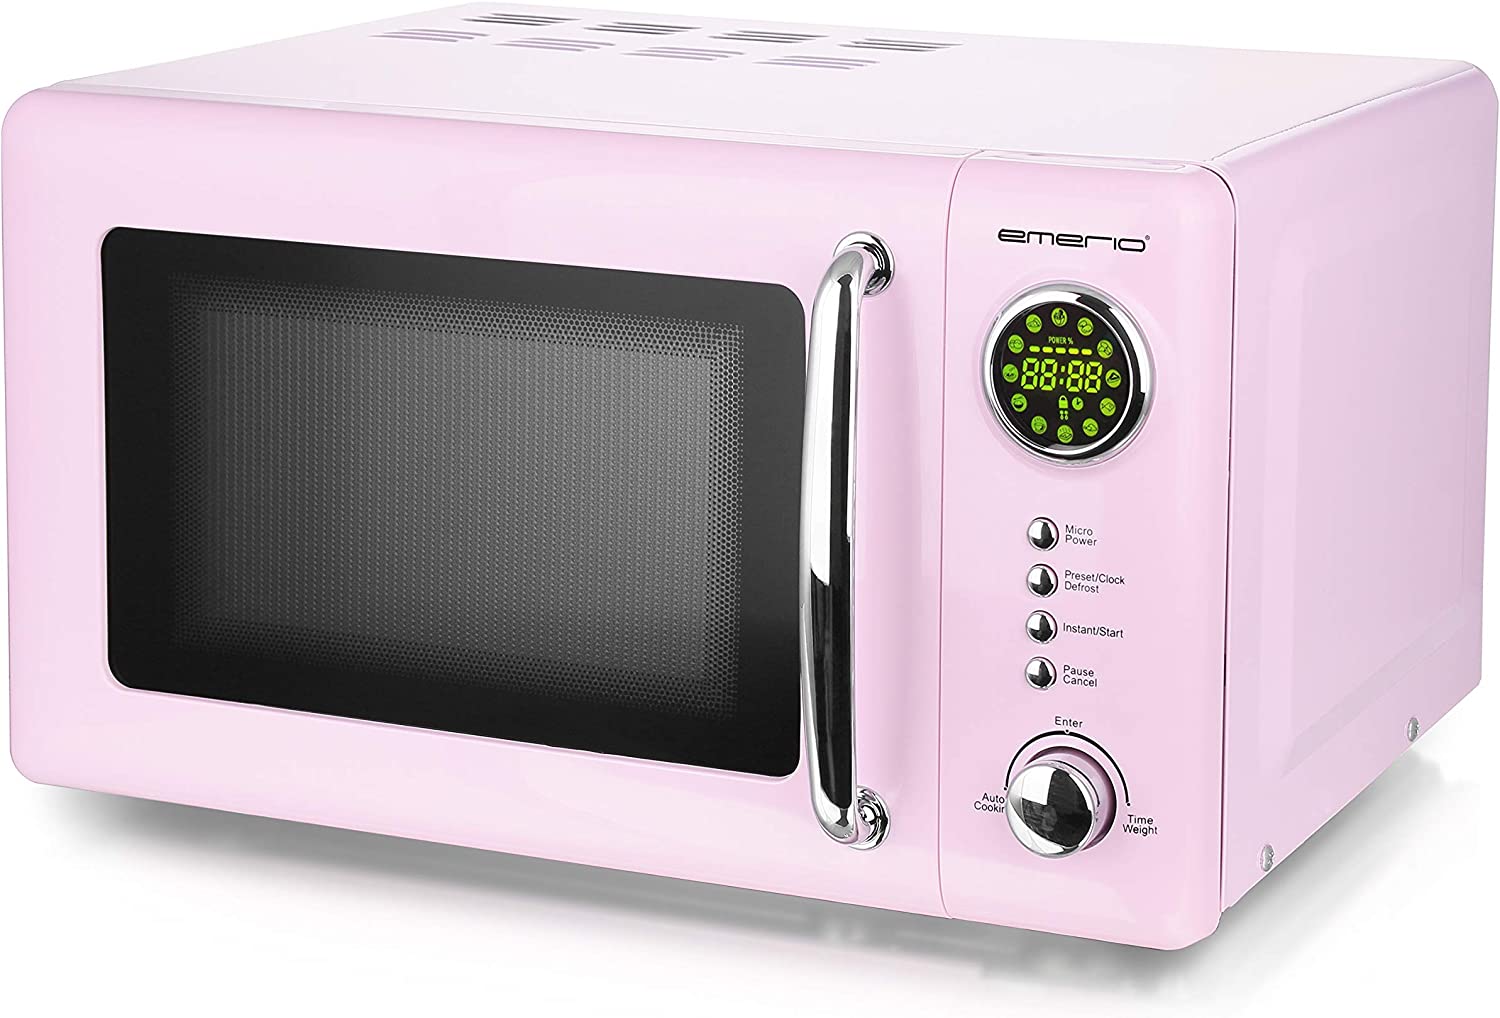 Emerio MW-112141.1 Microwave Oven, 700 watts, 20 Litres, turntable, retro design